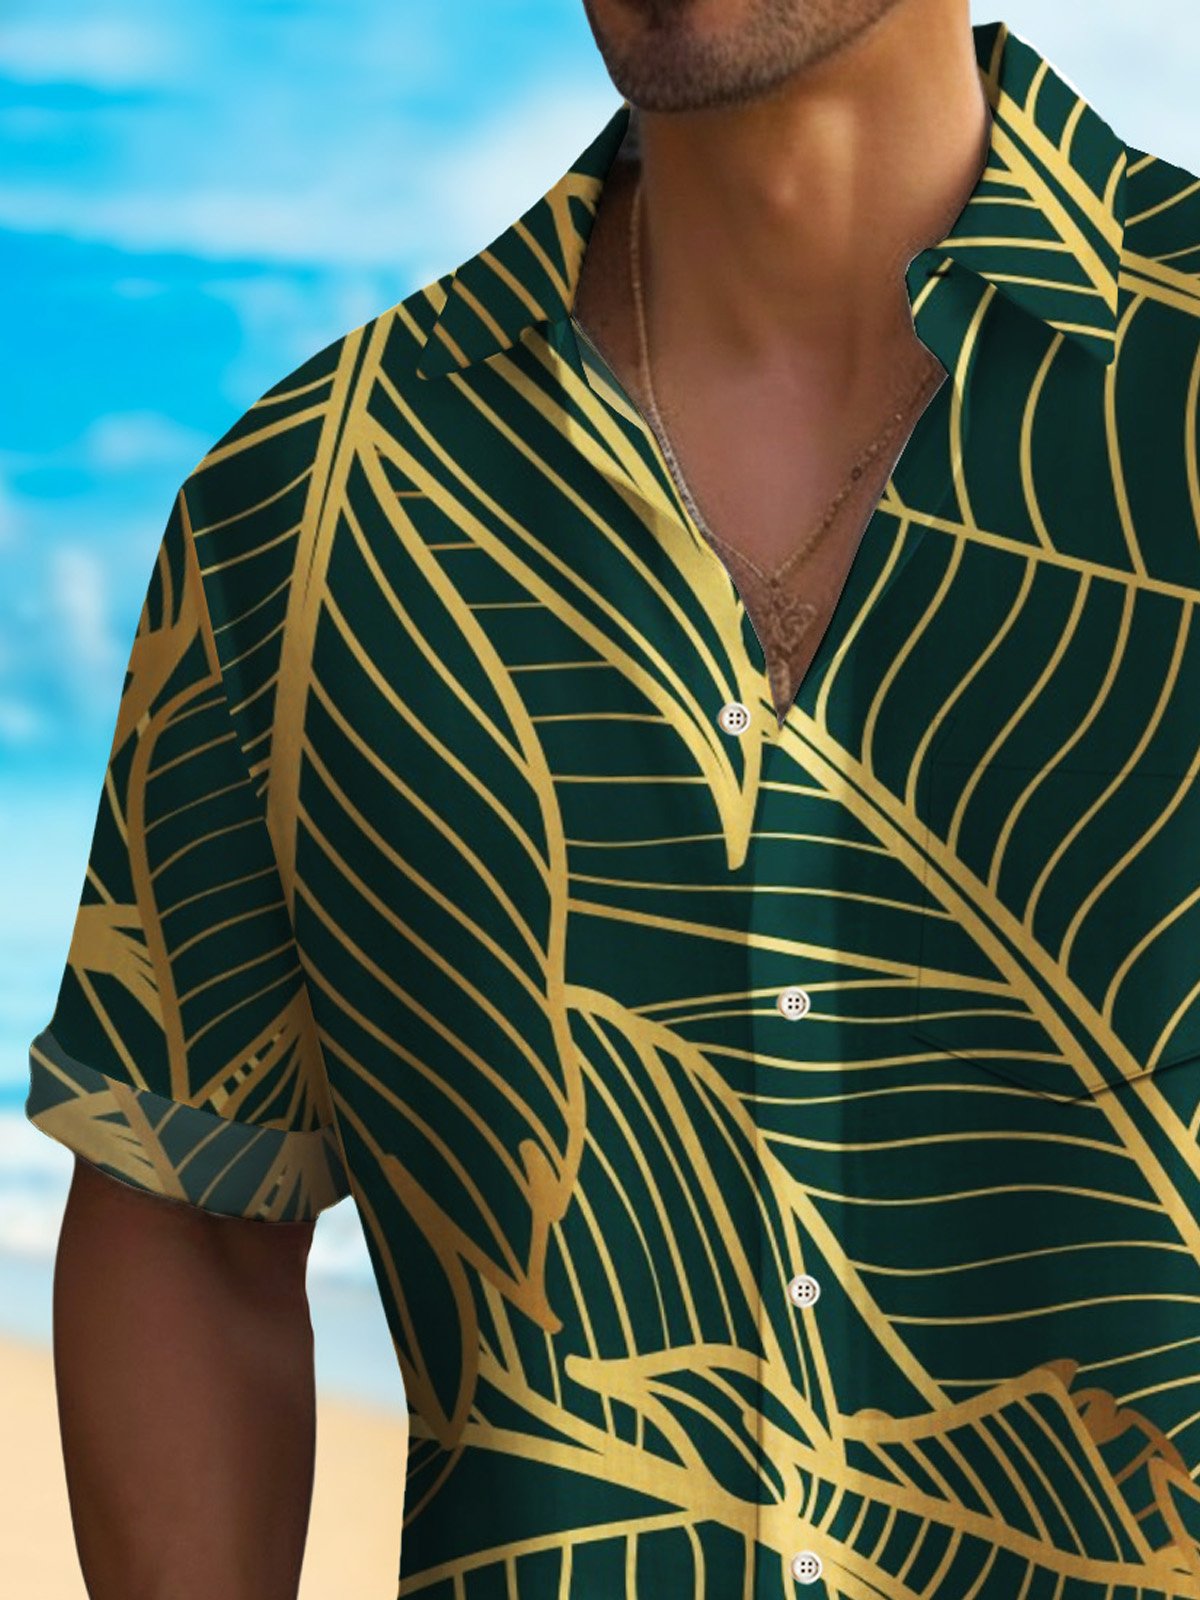 Royaura® Vacation Art Floral Men's Hawaiian Shirt Stretch Quick Dry Pocket Shirt Big Tall